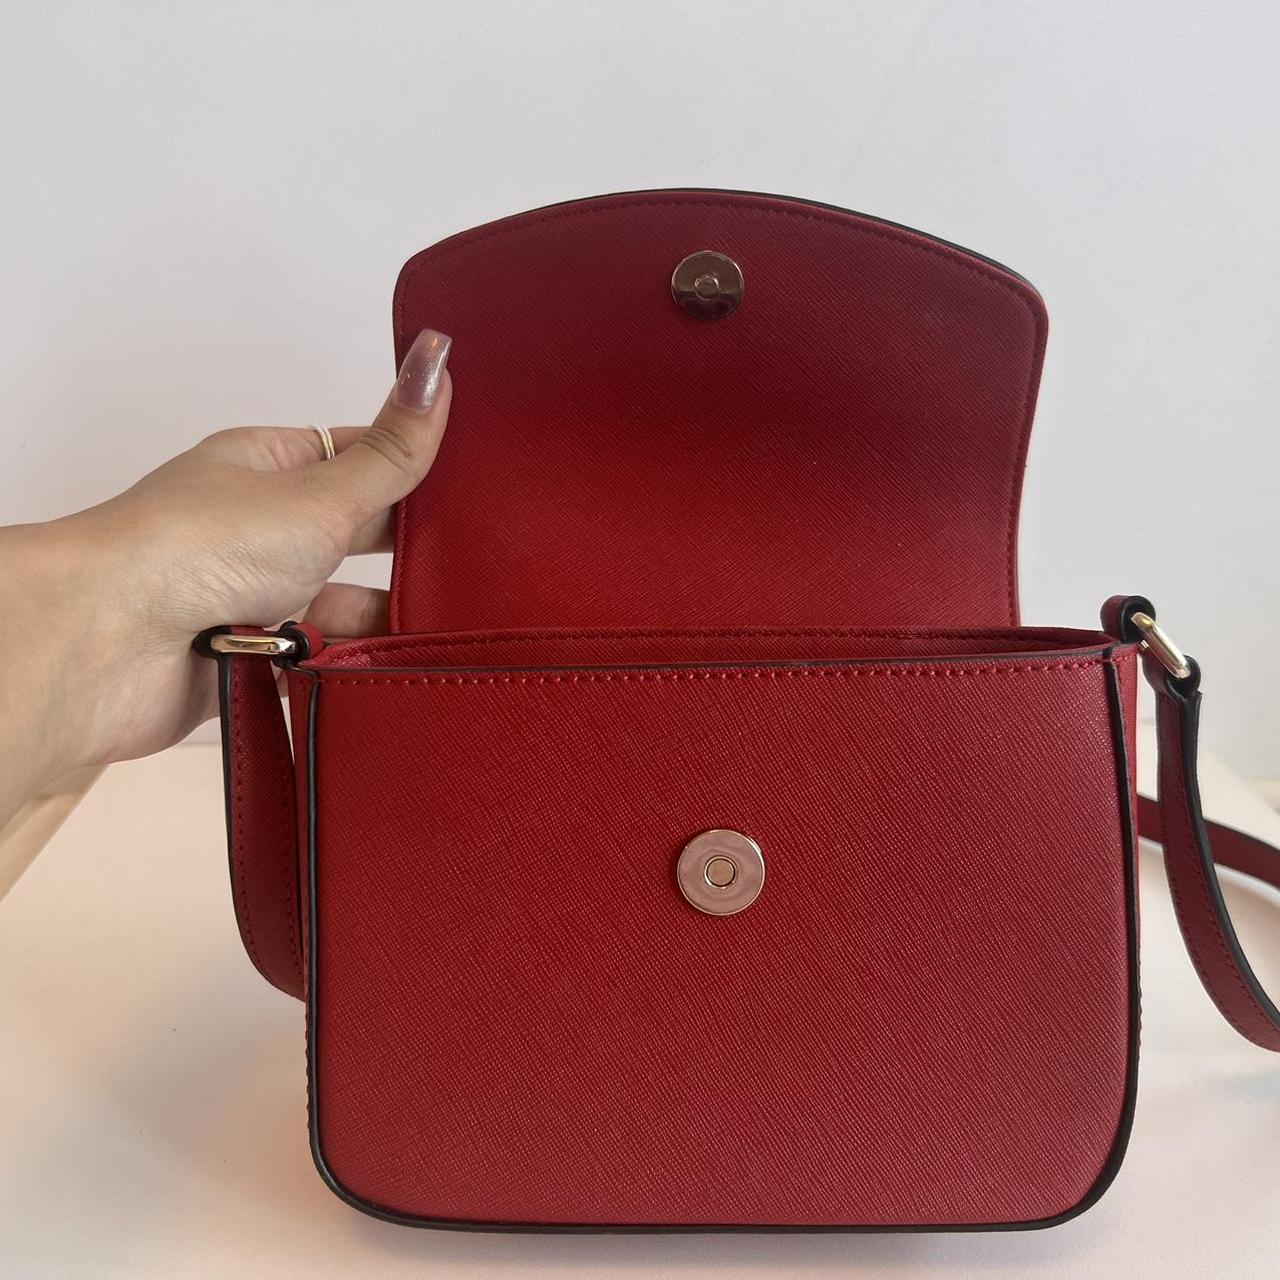 DKNY Red Leather Satchel Handbag - Walmart.com